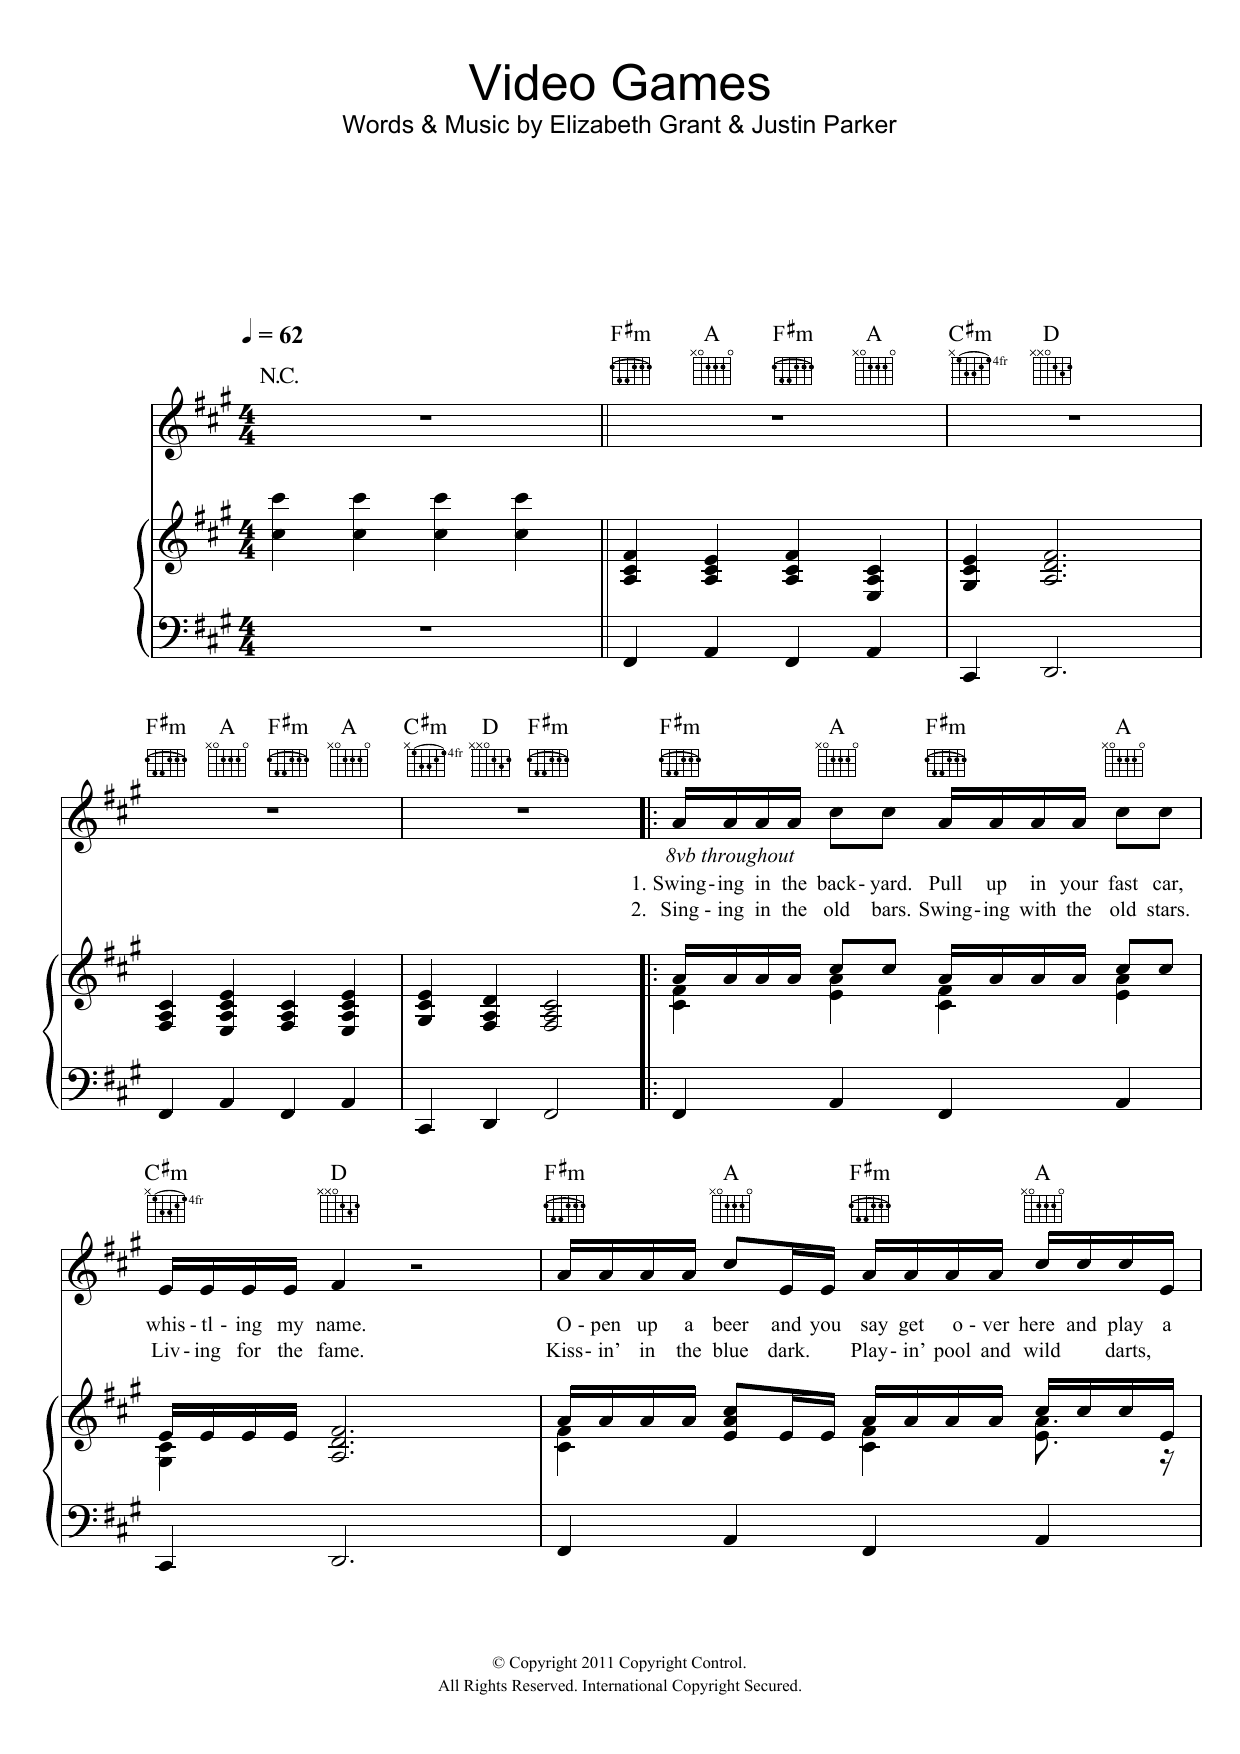 Lana Del Rey Video Games Sheet Music Notes & Chords for Ukulele - Download or Print PDF